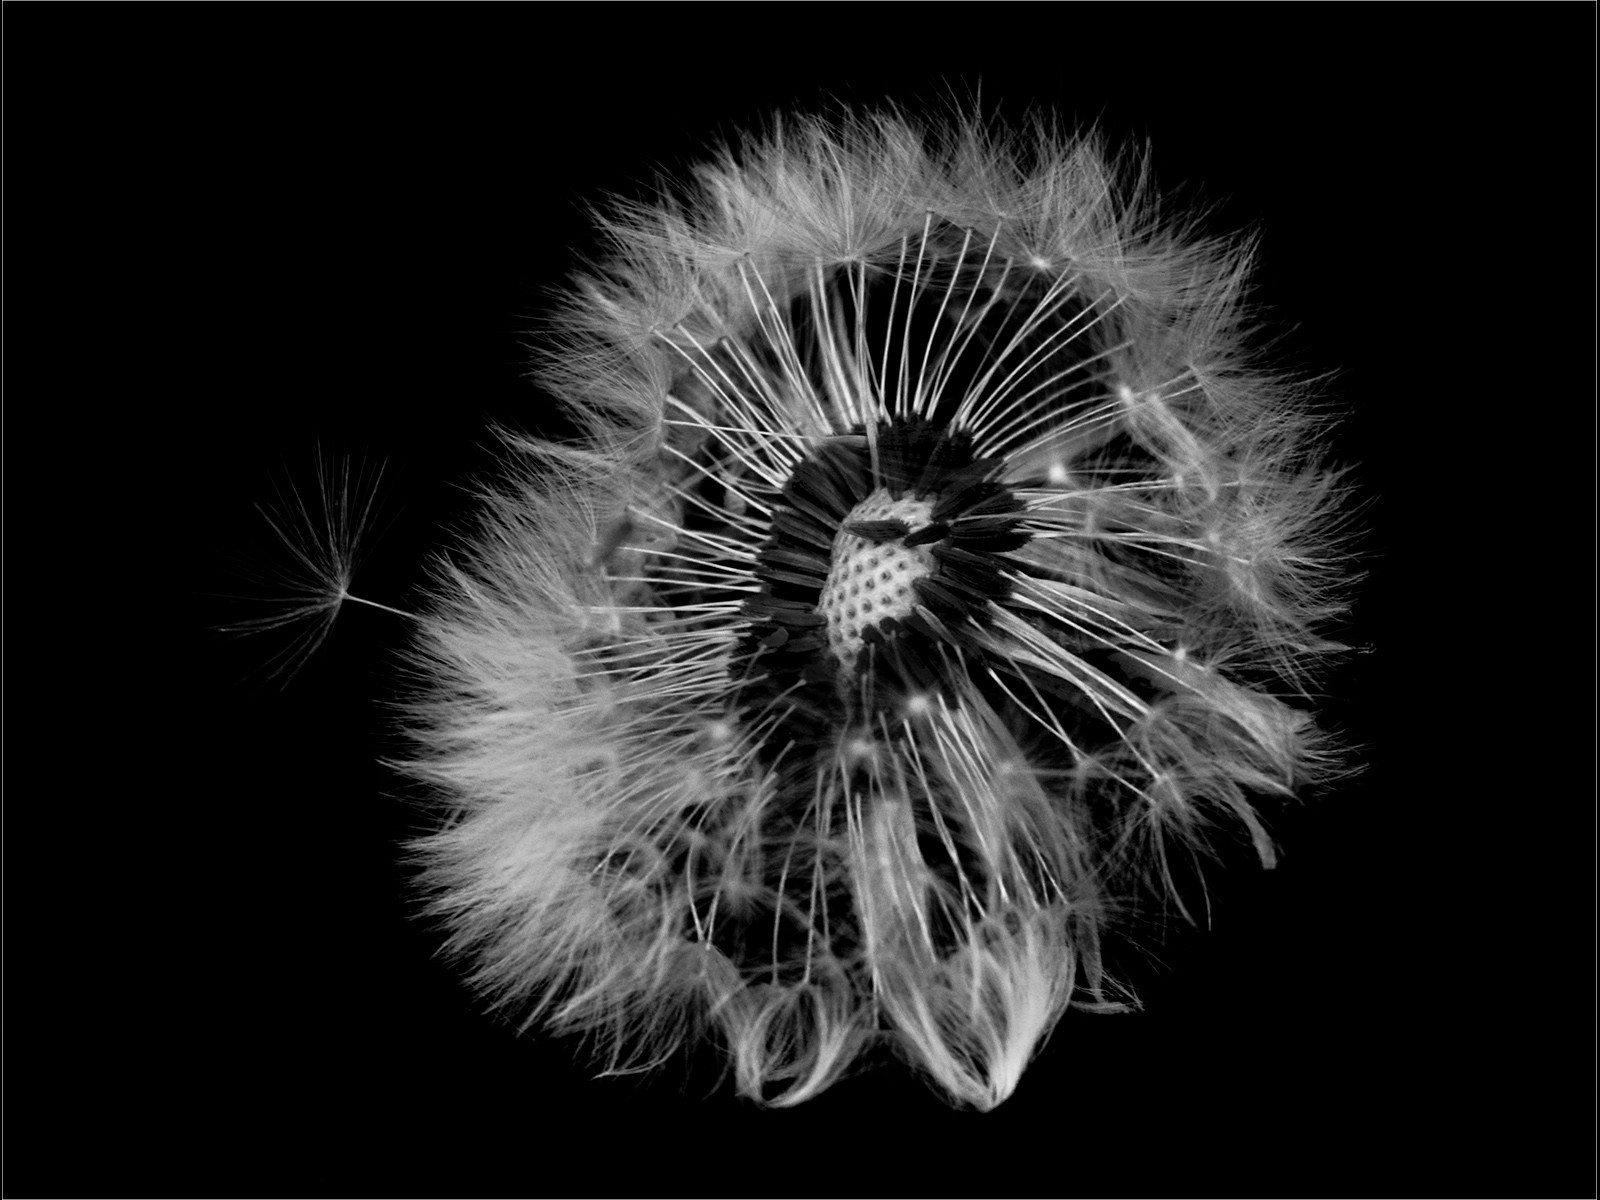 A Dandelion head losing its seeds